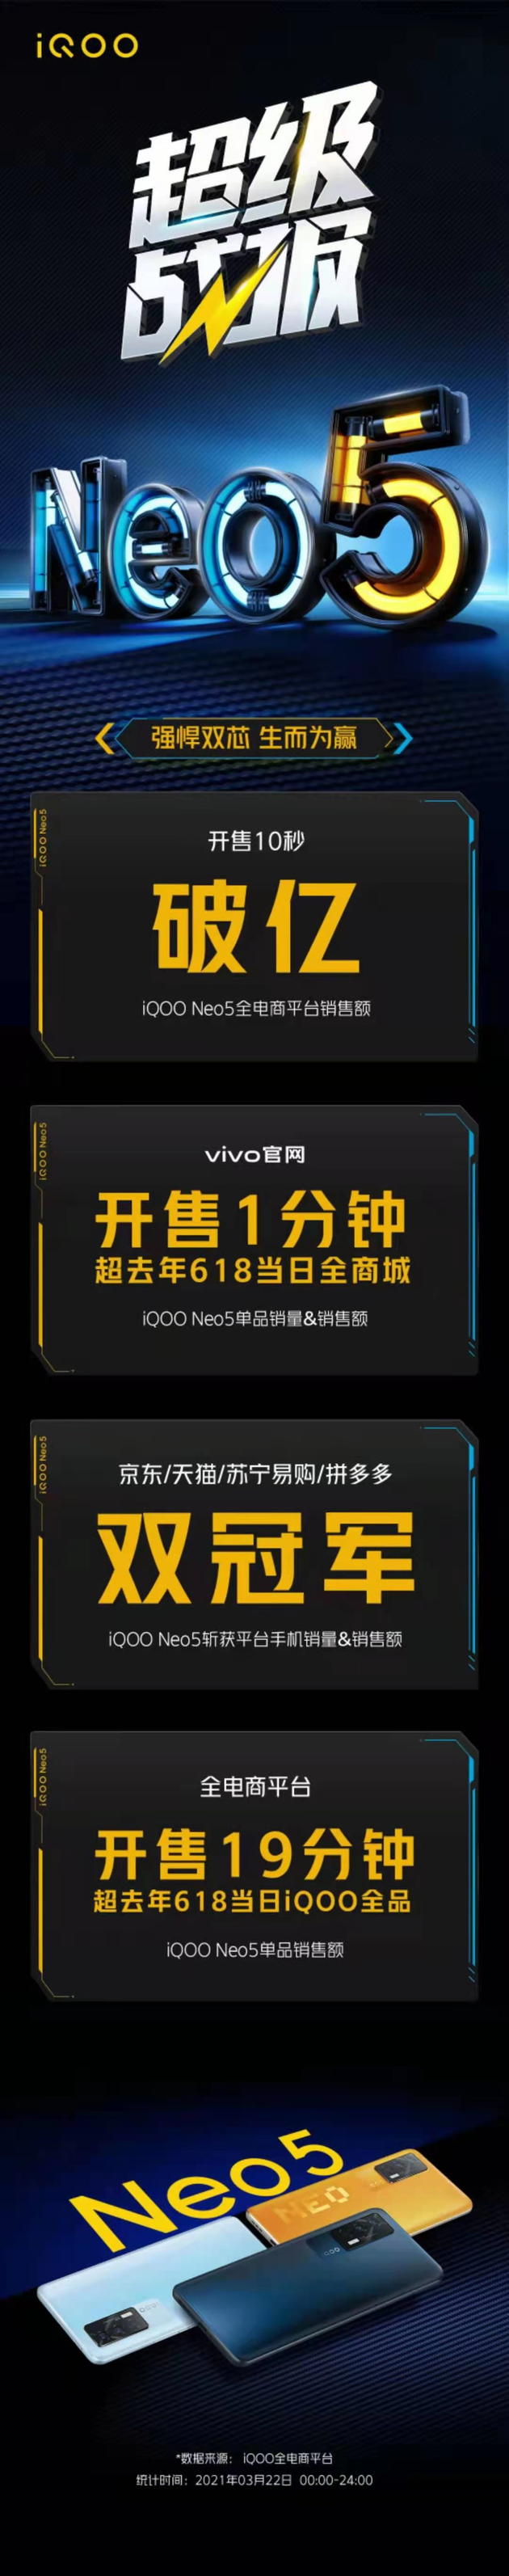 iQOO Neo5发战报 销售额10秒破亿